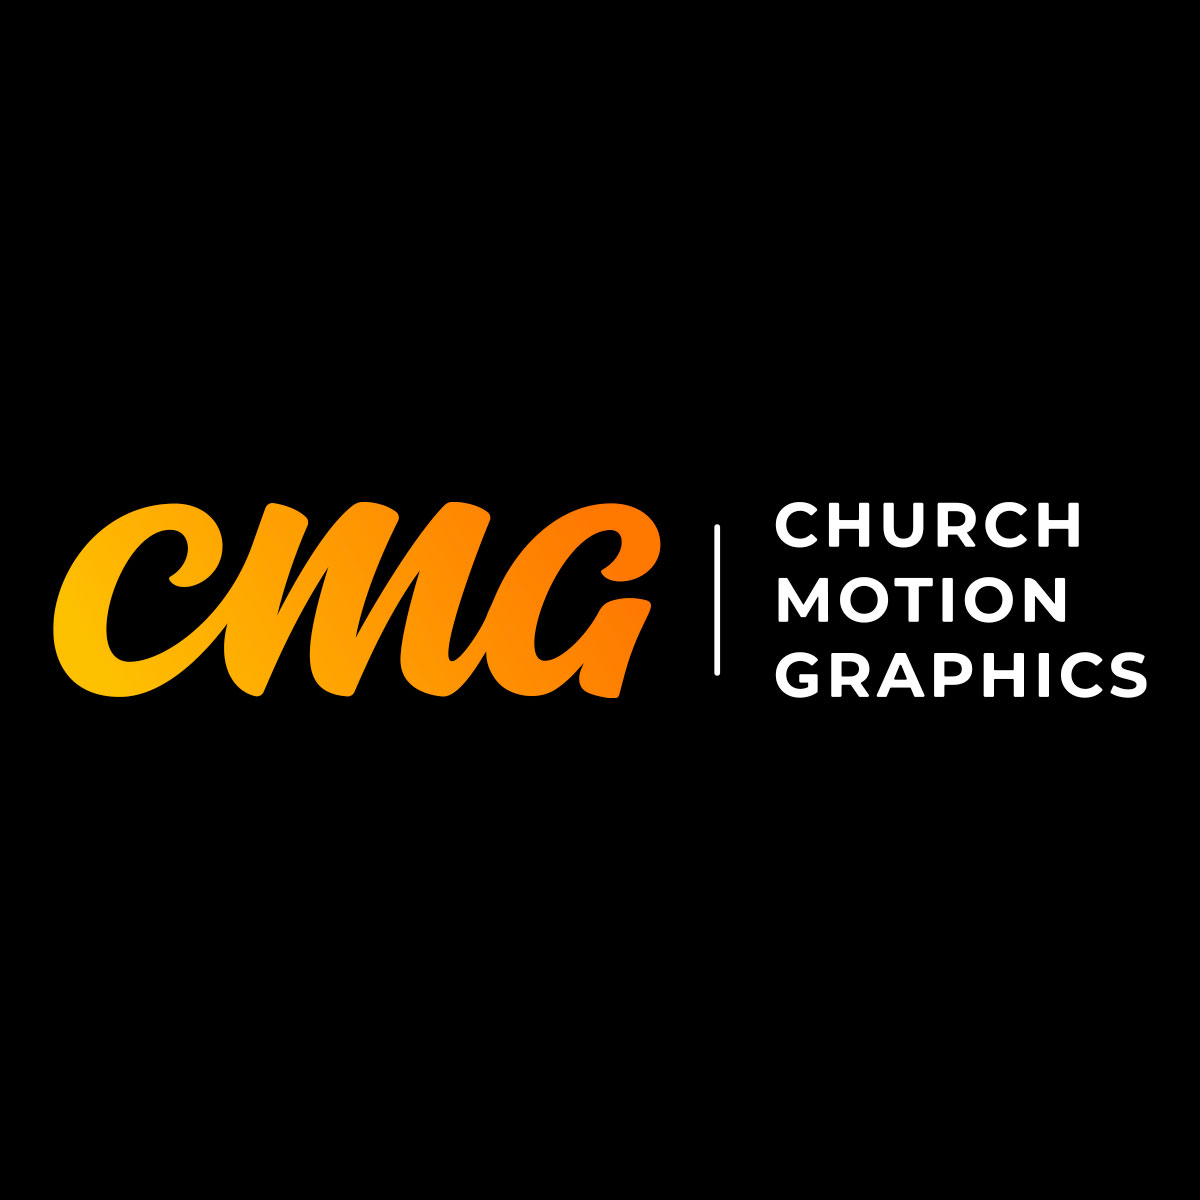 cmg packs church motion graphics